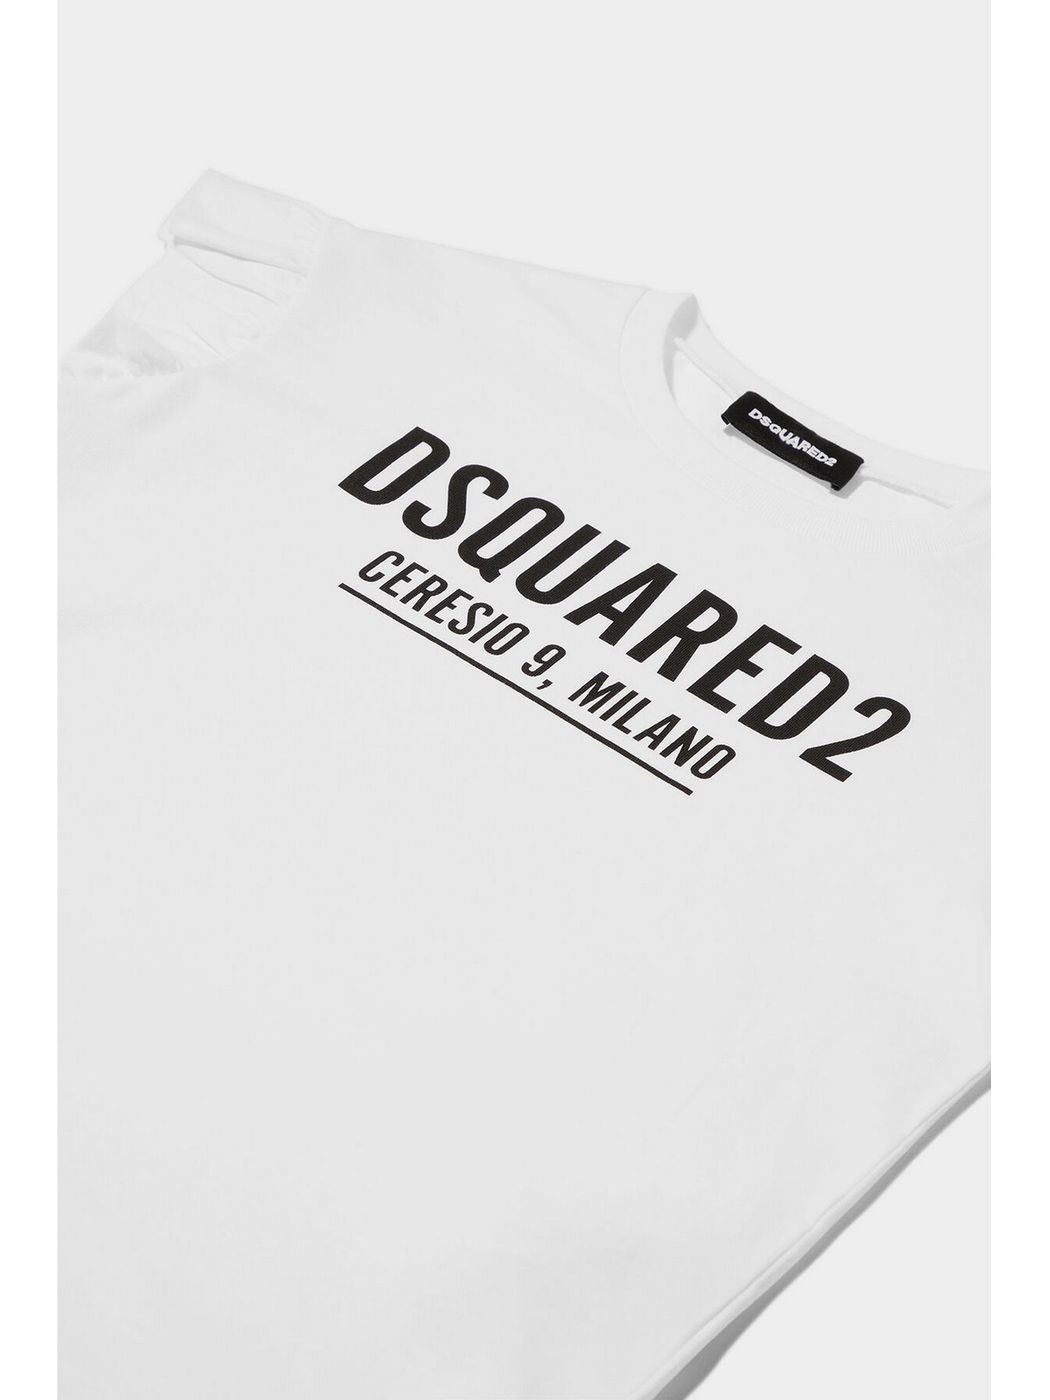 DSQUARED2 T-Shirt e Polo Bambine e ragazze  DQ0729 D00MV Bianco